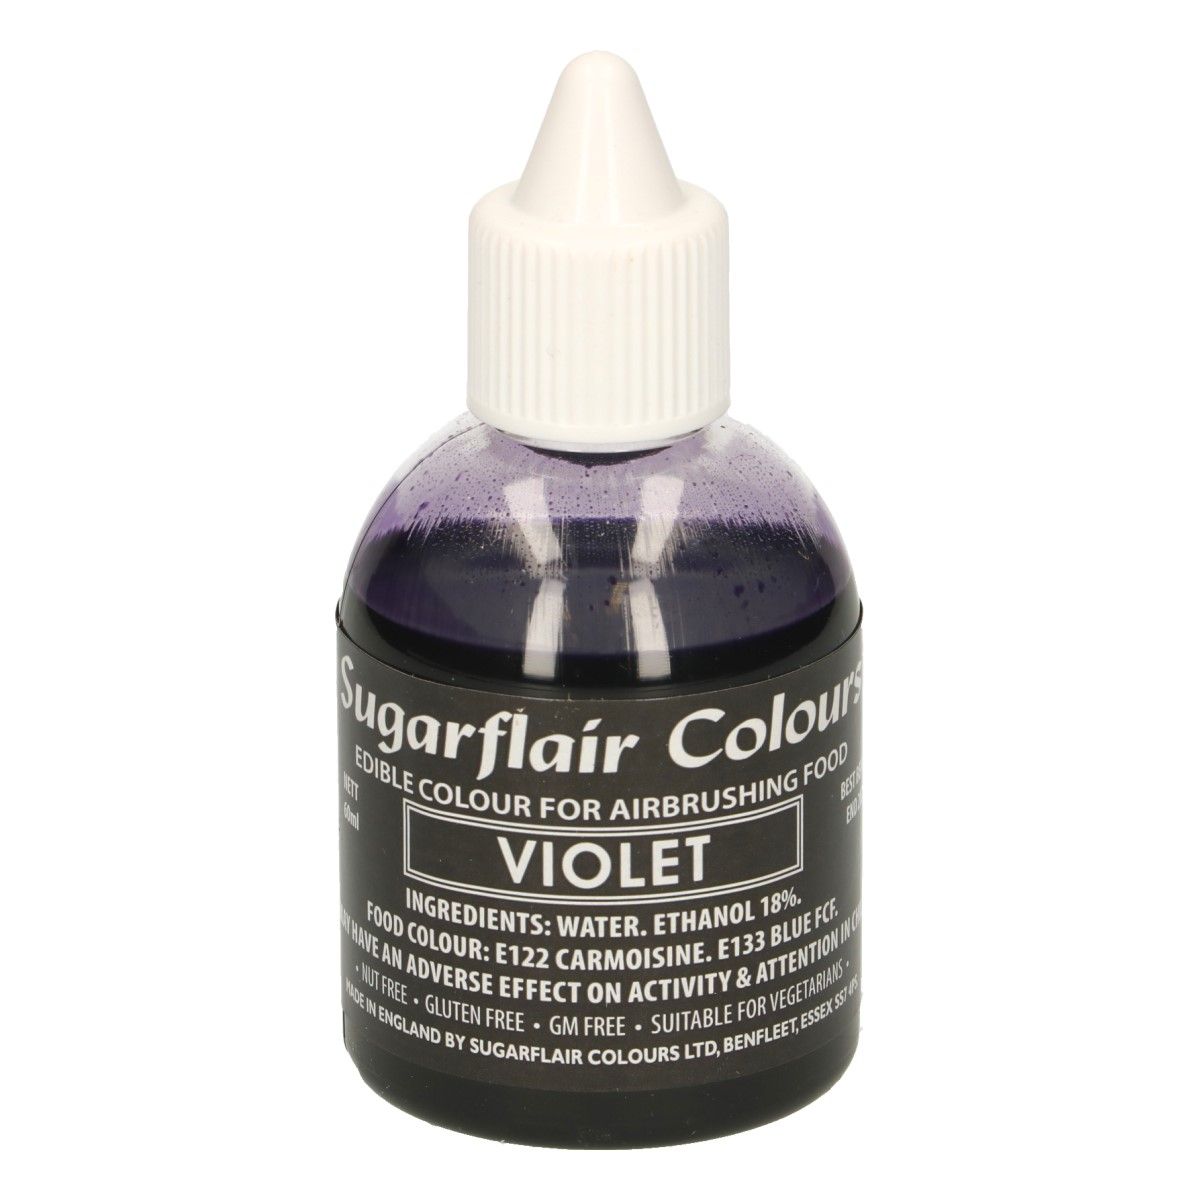  Foto: Sugarflair Airbrush Colouring -Violet- 60ml